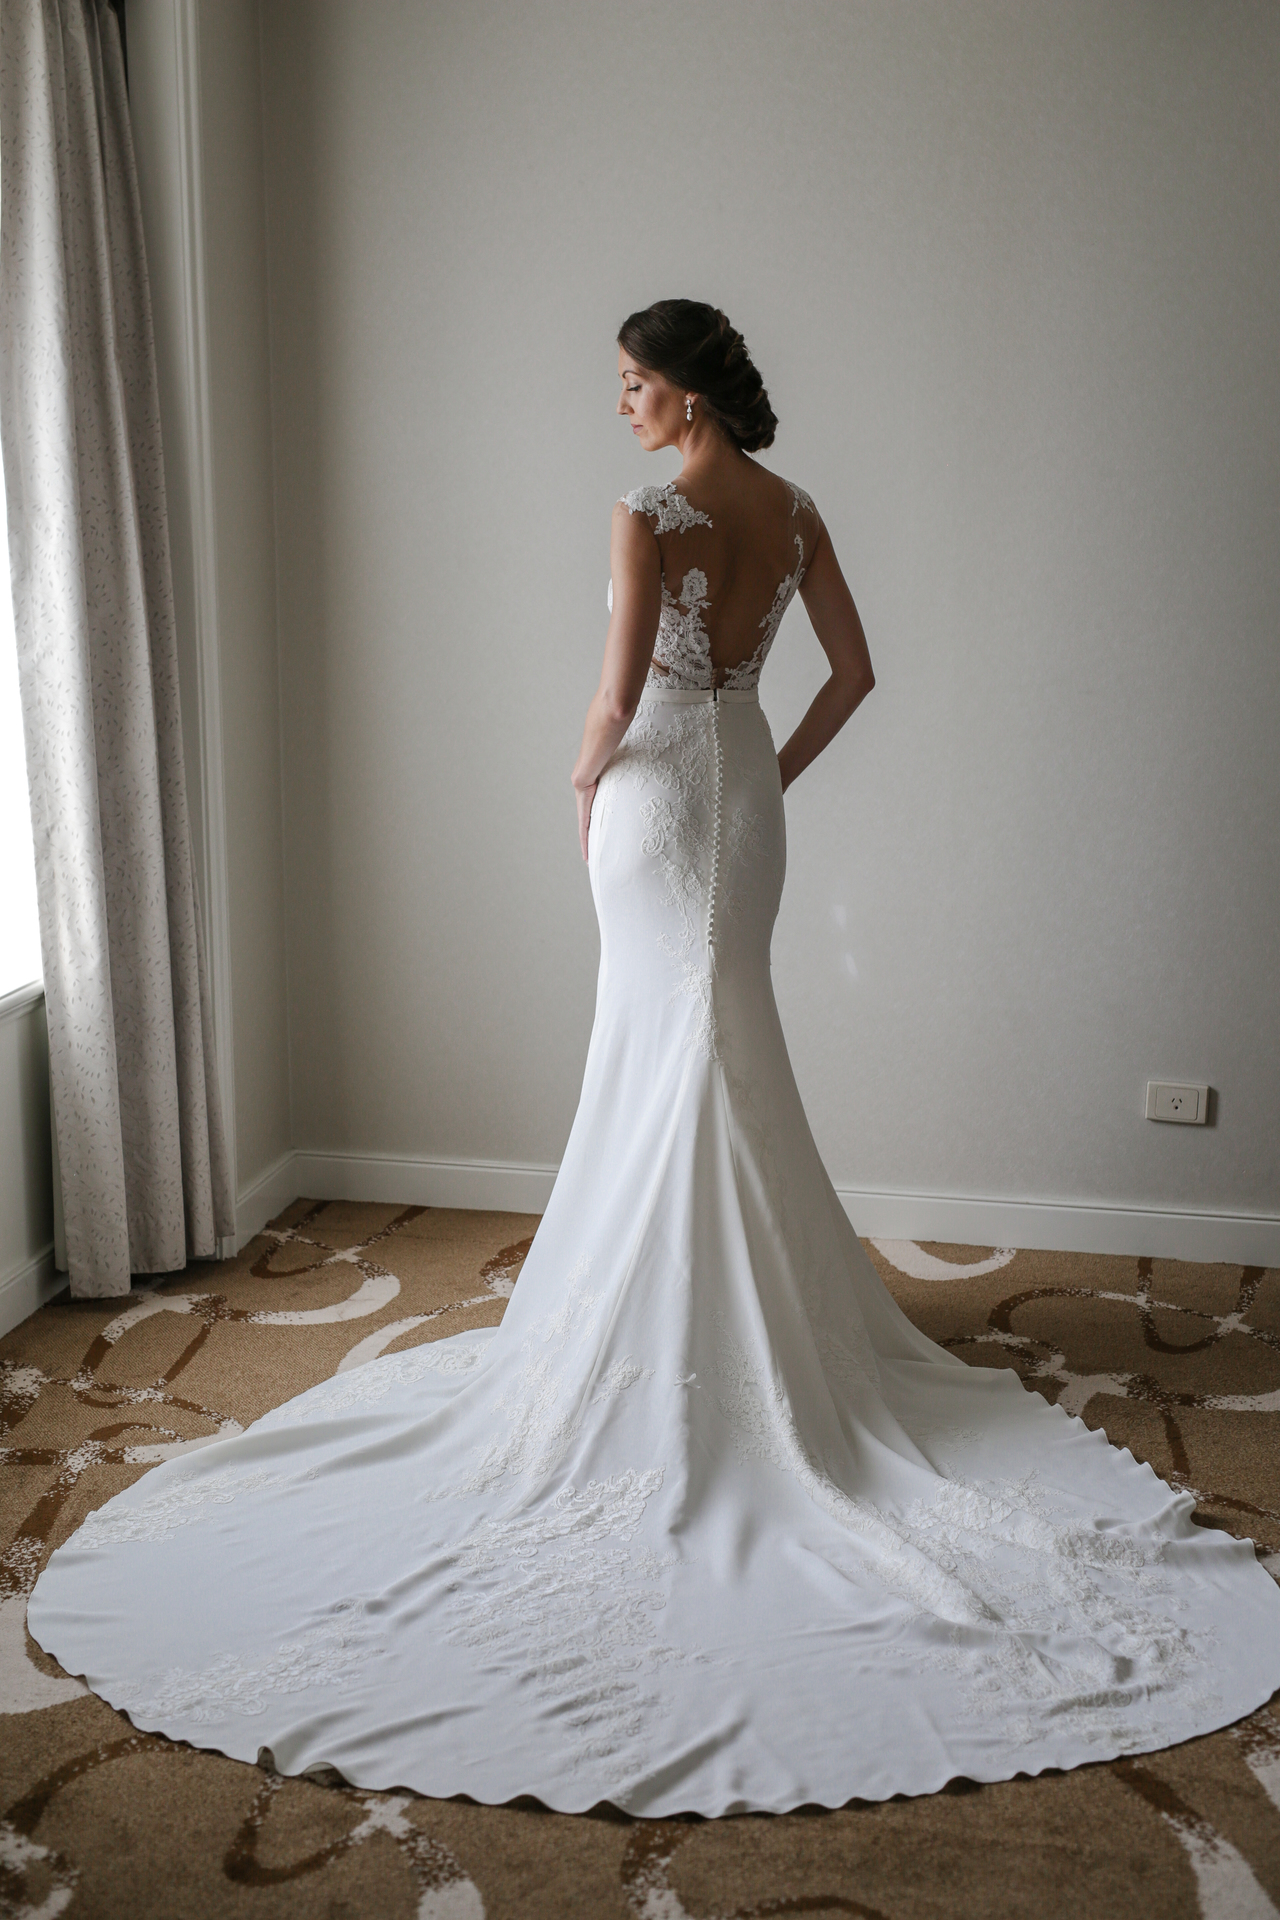 Sydney bride showing off her wedding gown